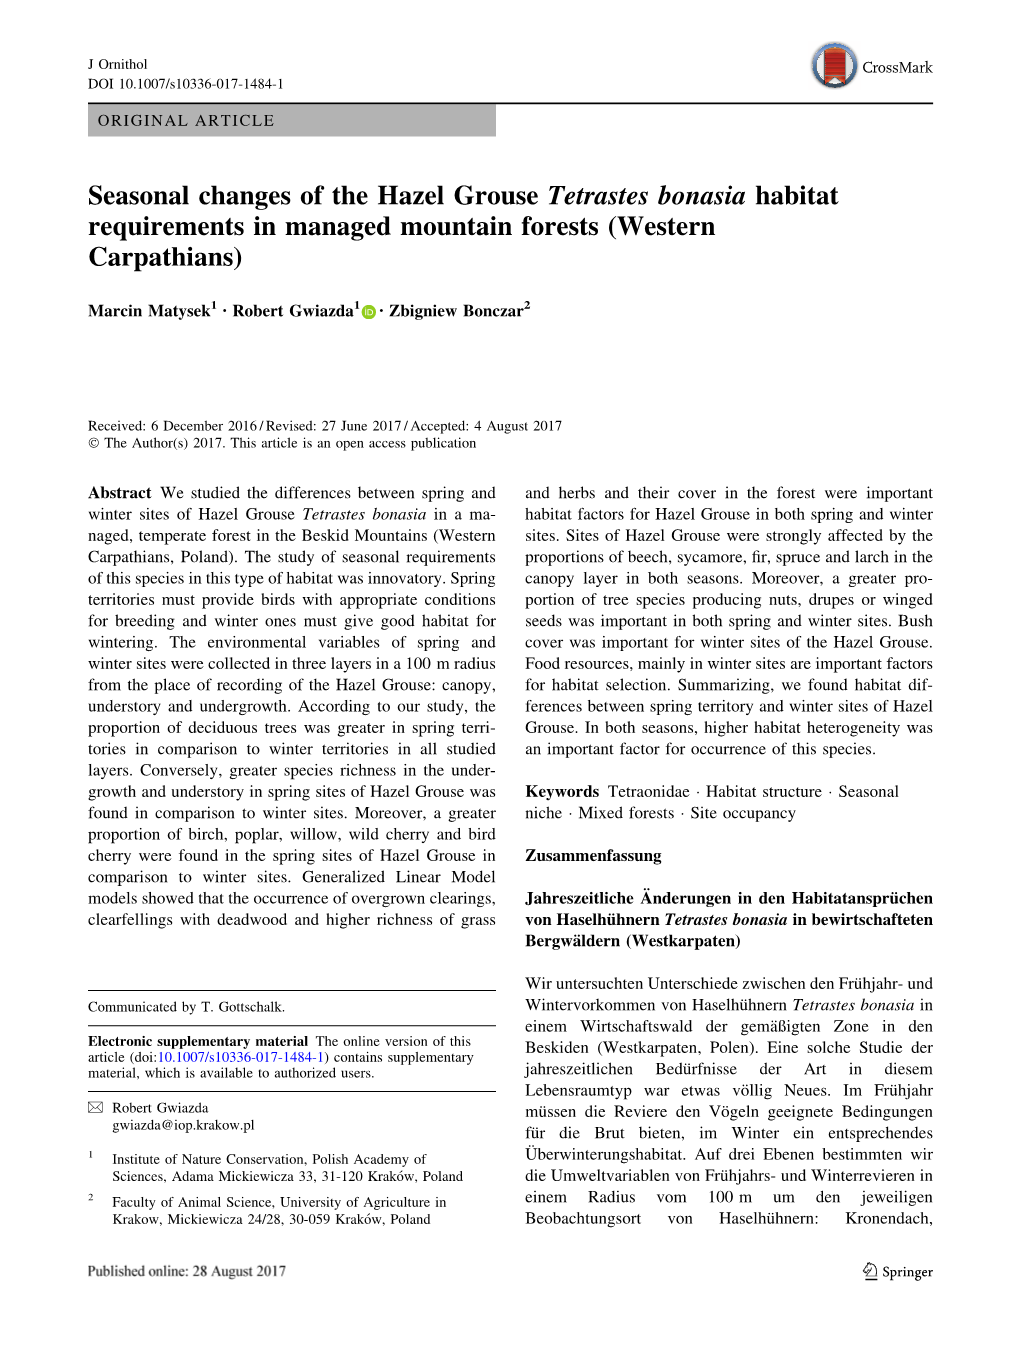 Seasonal Changes of the Hazel Grouse Tetrastes Bonasia Habitat Requirements in Managed Mountain Forests (Western Carpathians)